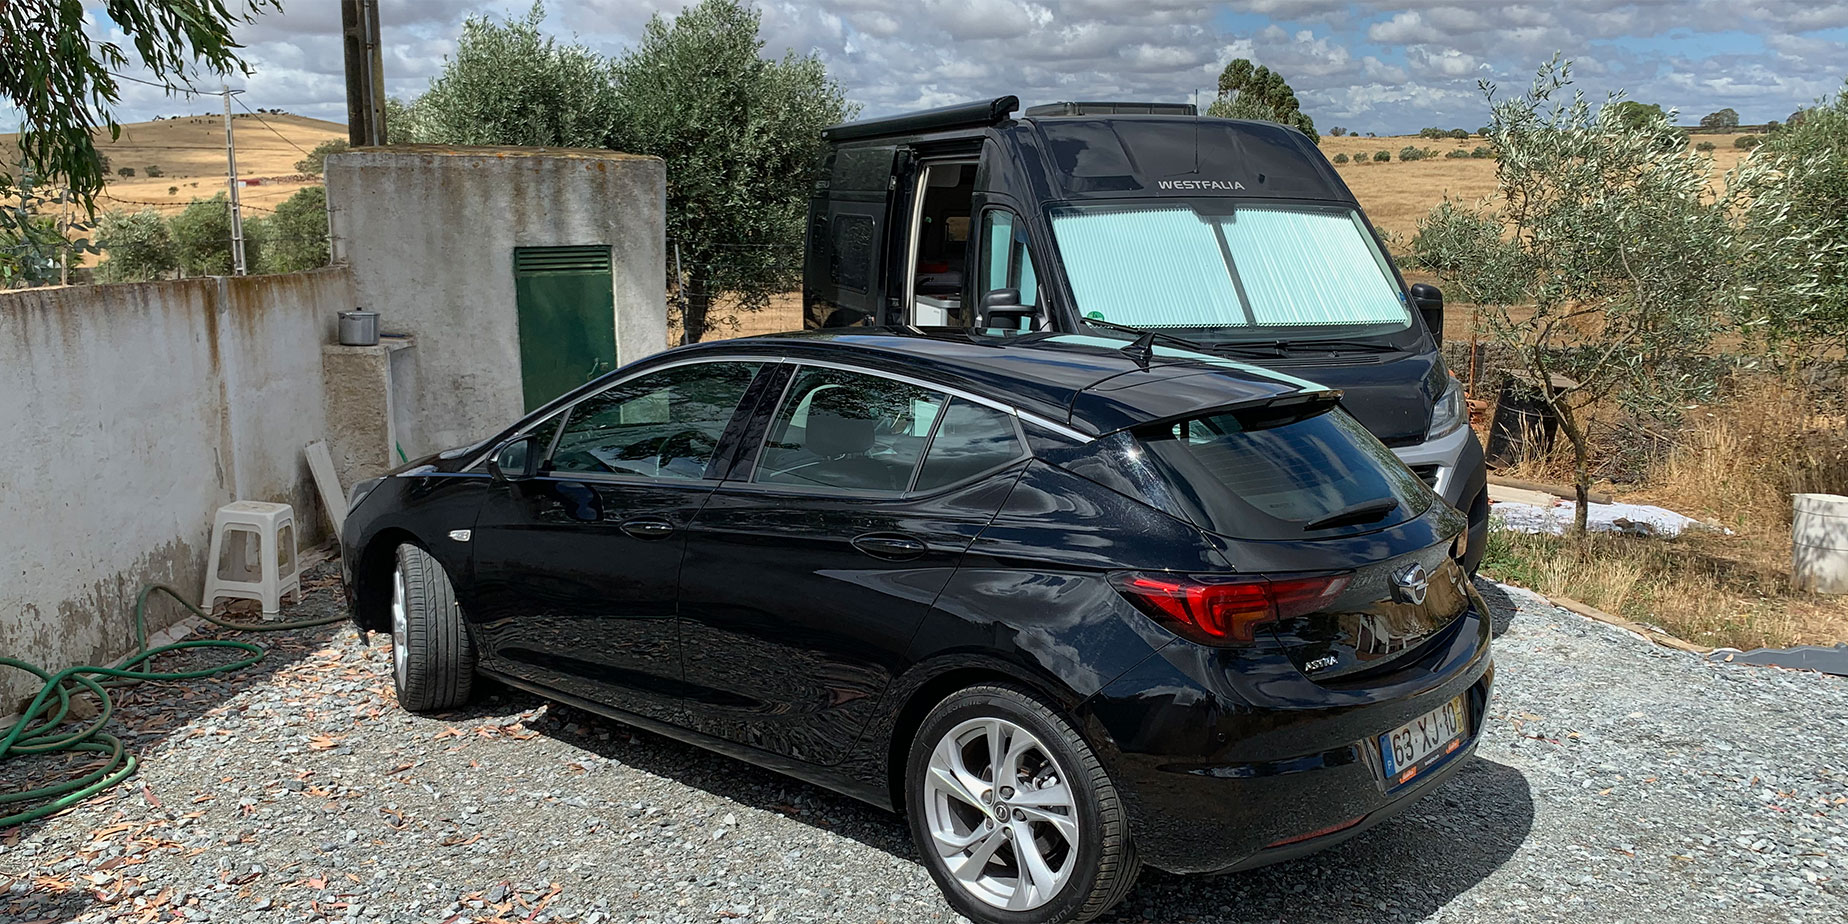 Leasa en bil i Portugal